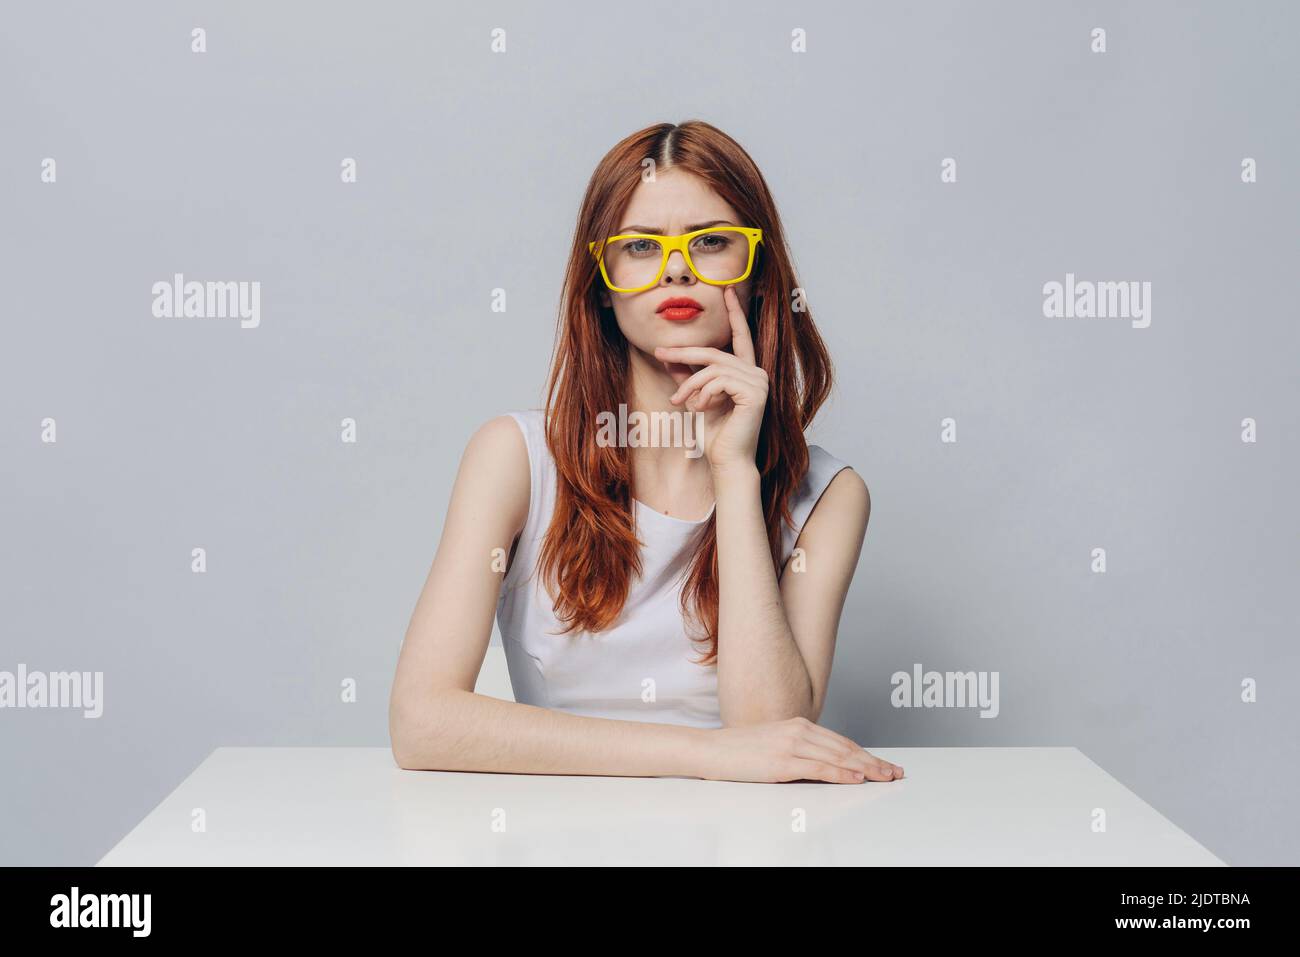 Serious Caucasian woman sitting at table wearing yellow eyeglasses Stock Photo